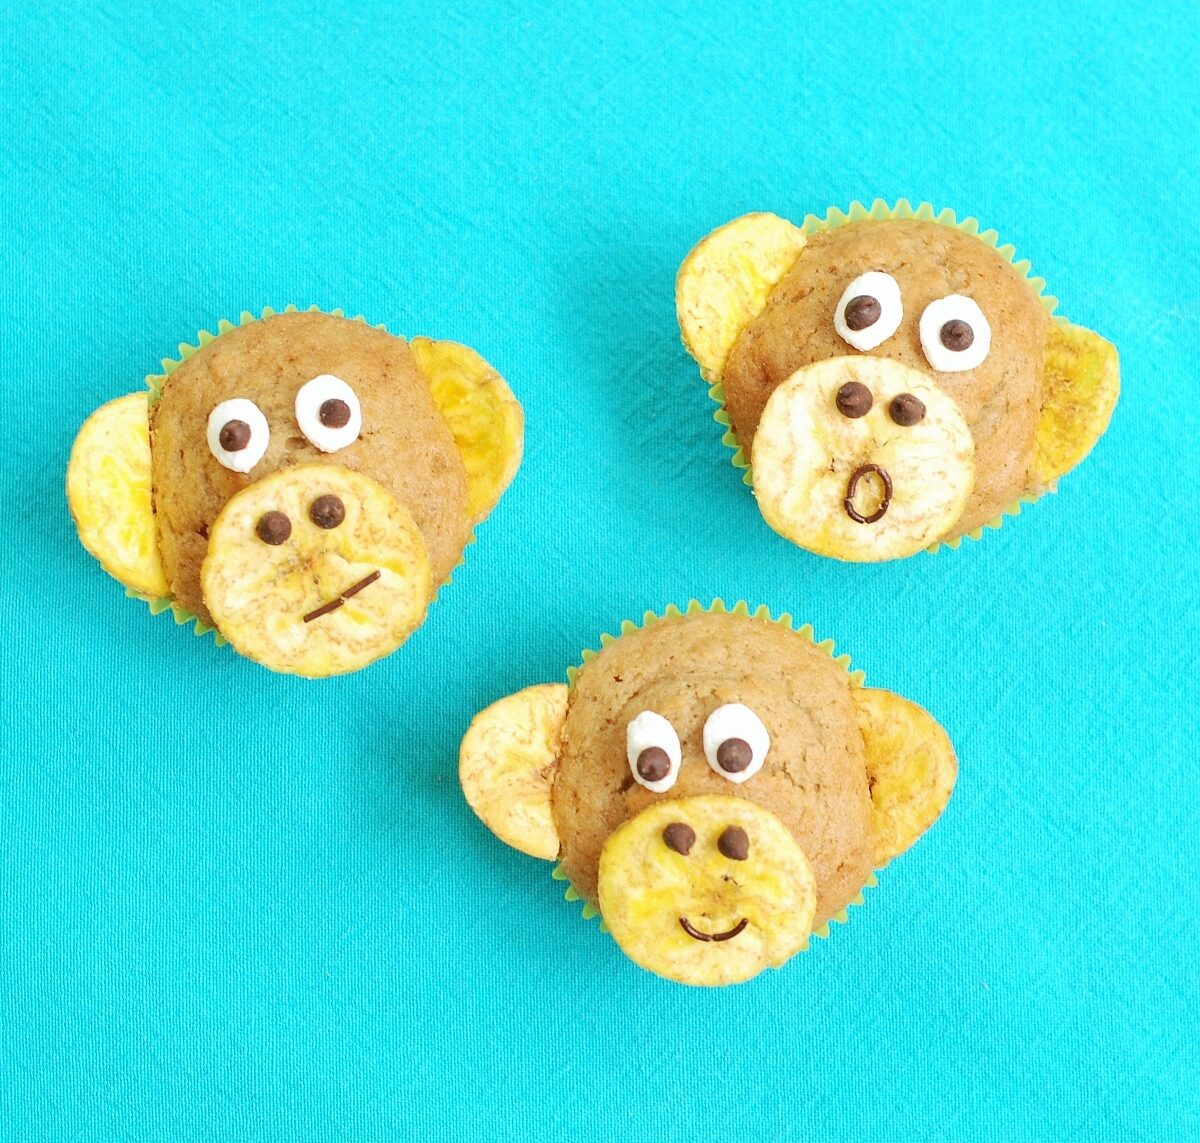 banana nut muffins that look like monkeys on a blue cloth